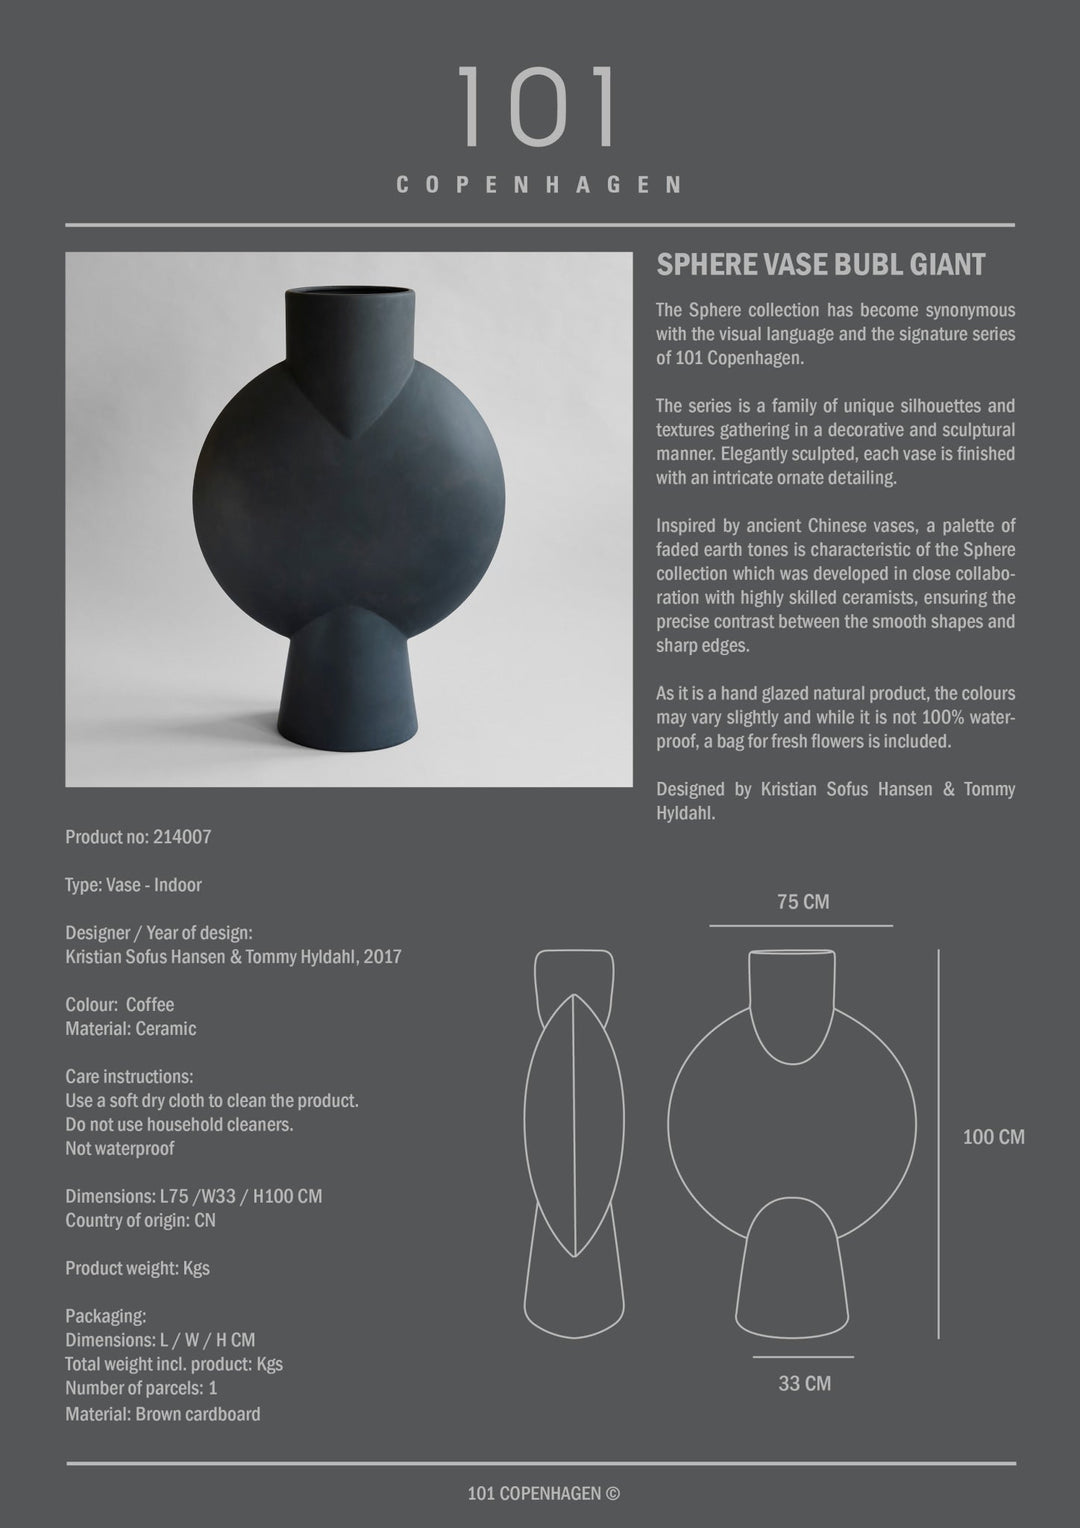 101 Copenhagen Sphere Vase Bubl, Giant - $1,495.00